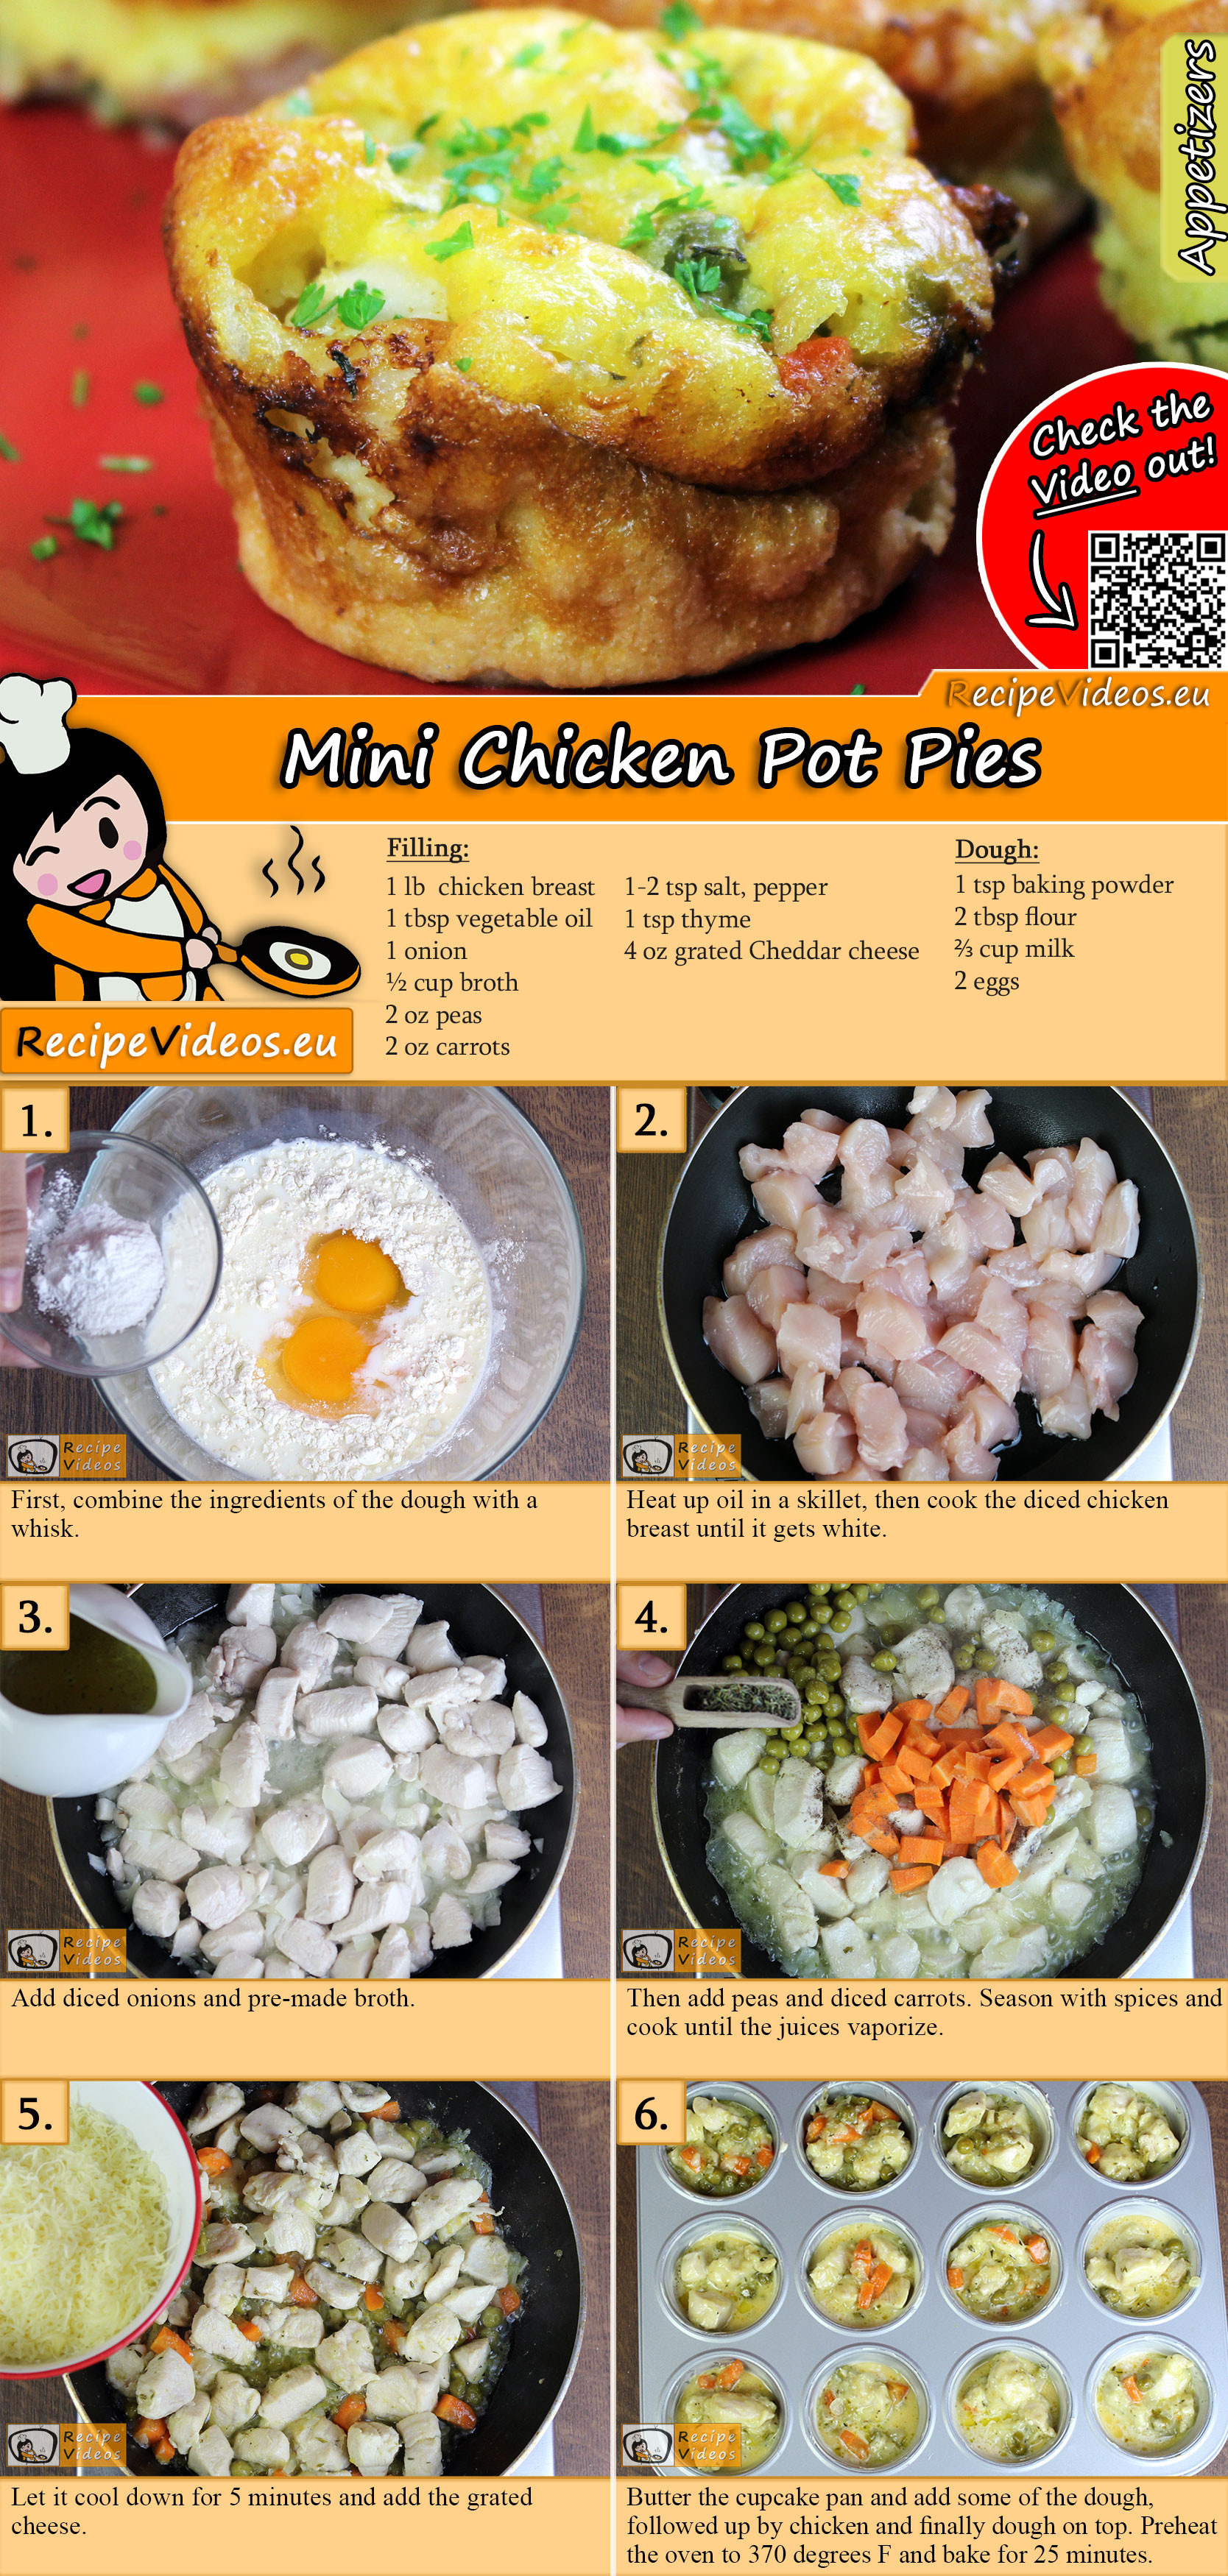 Mini Chicken Pot Pies recipe with video